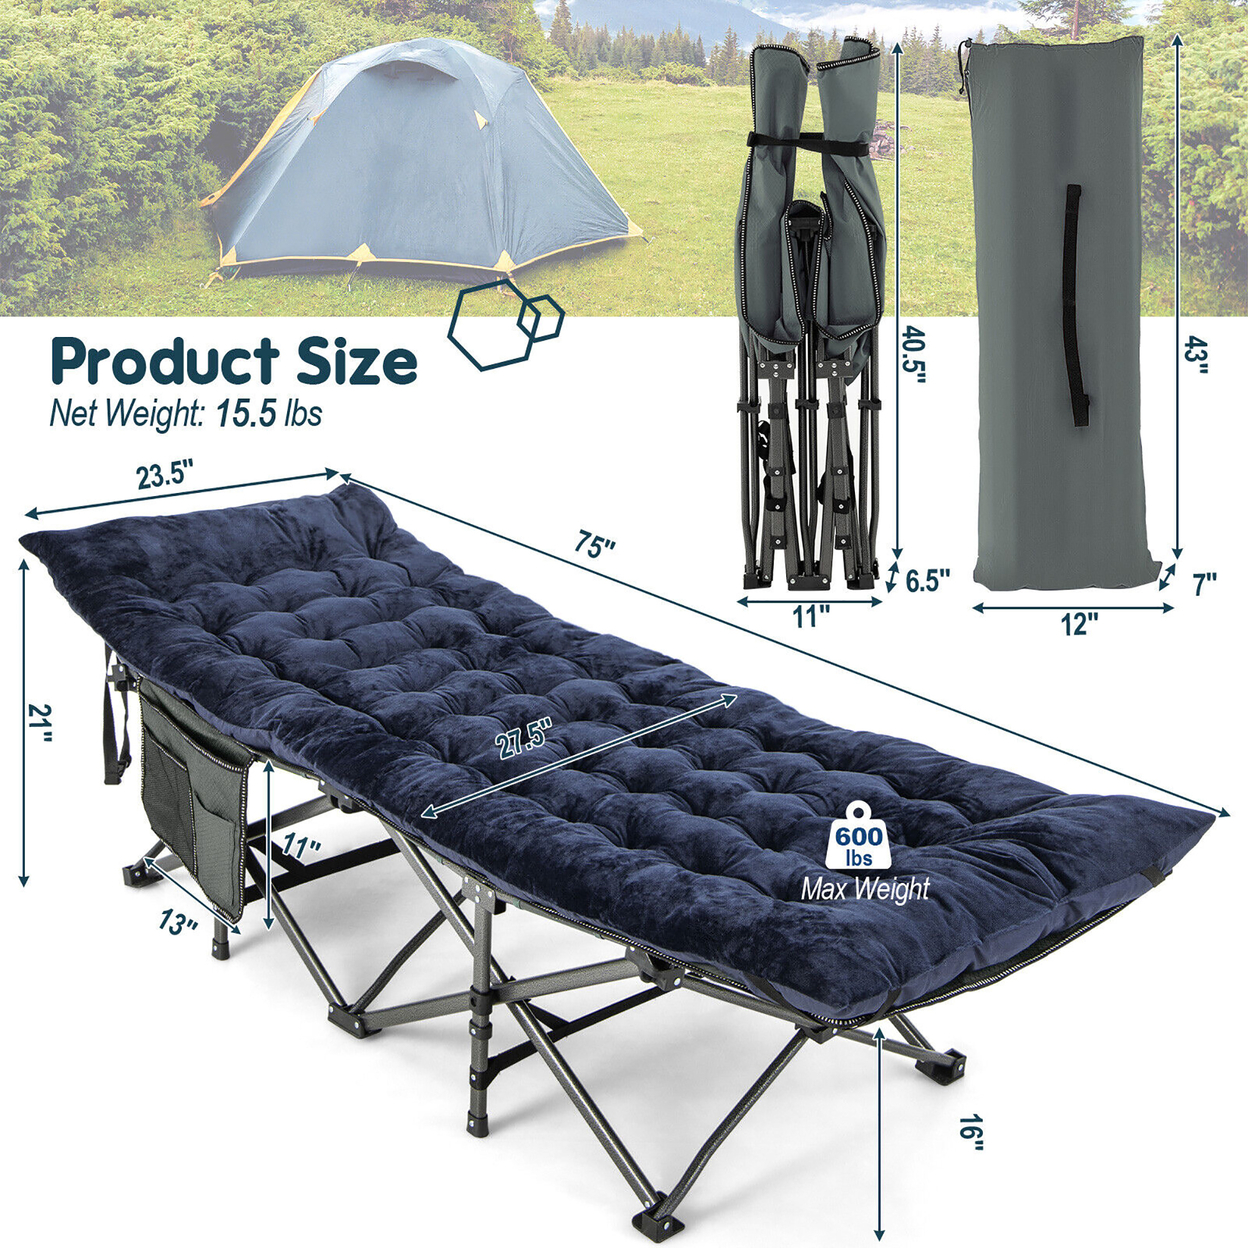 Wide Foldable Camping Cot Heavy-Duty Steel Sleeping Cot W/Sleeping Mattress Navy